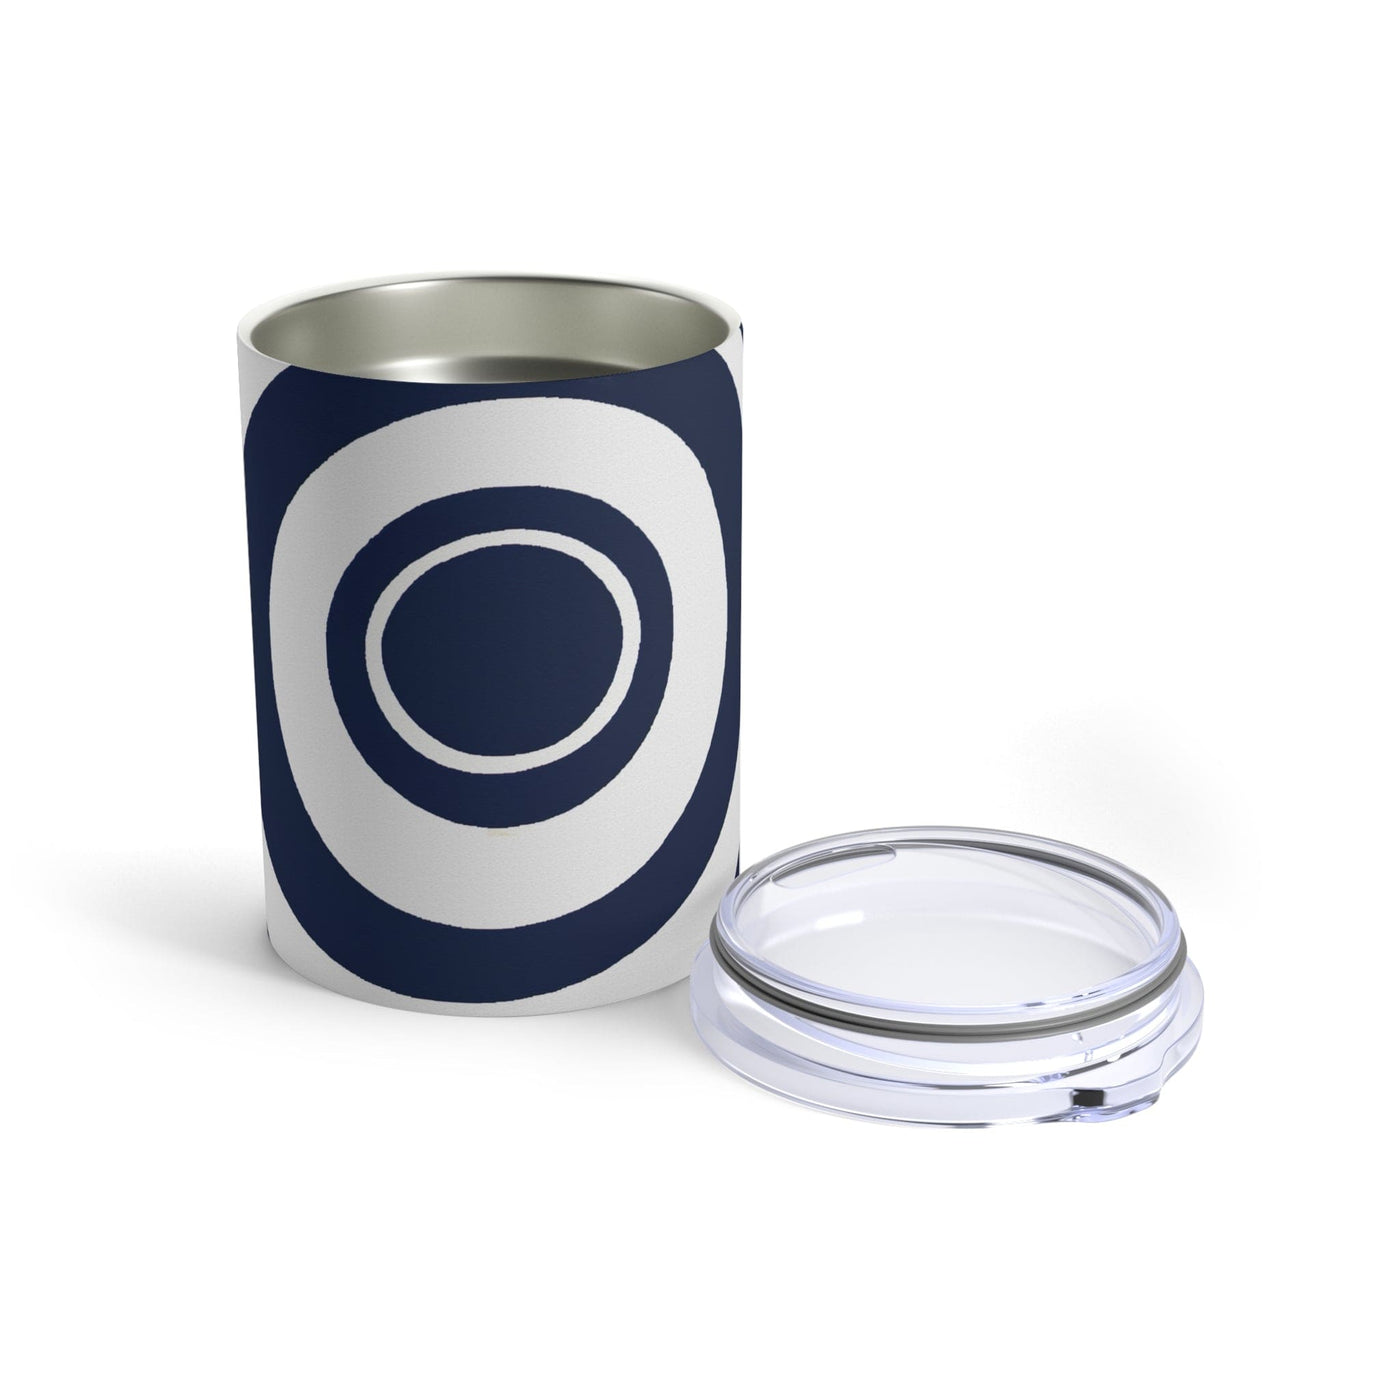 Insulated Tumbler 10oz Navy Blue And White Circular Pattern - Mug